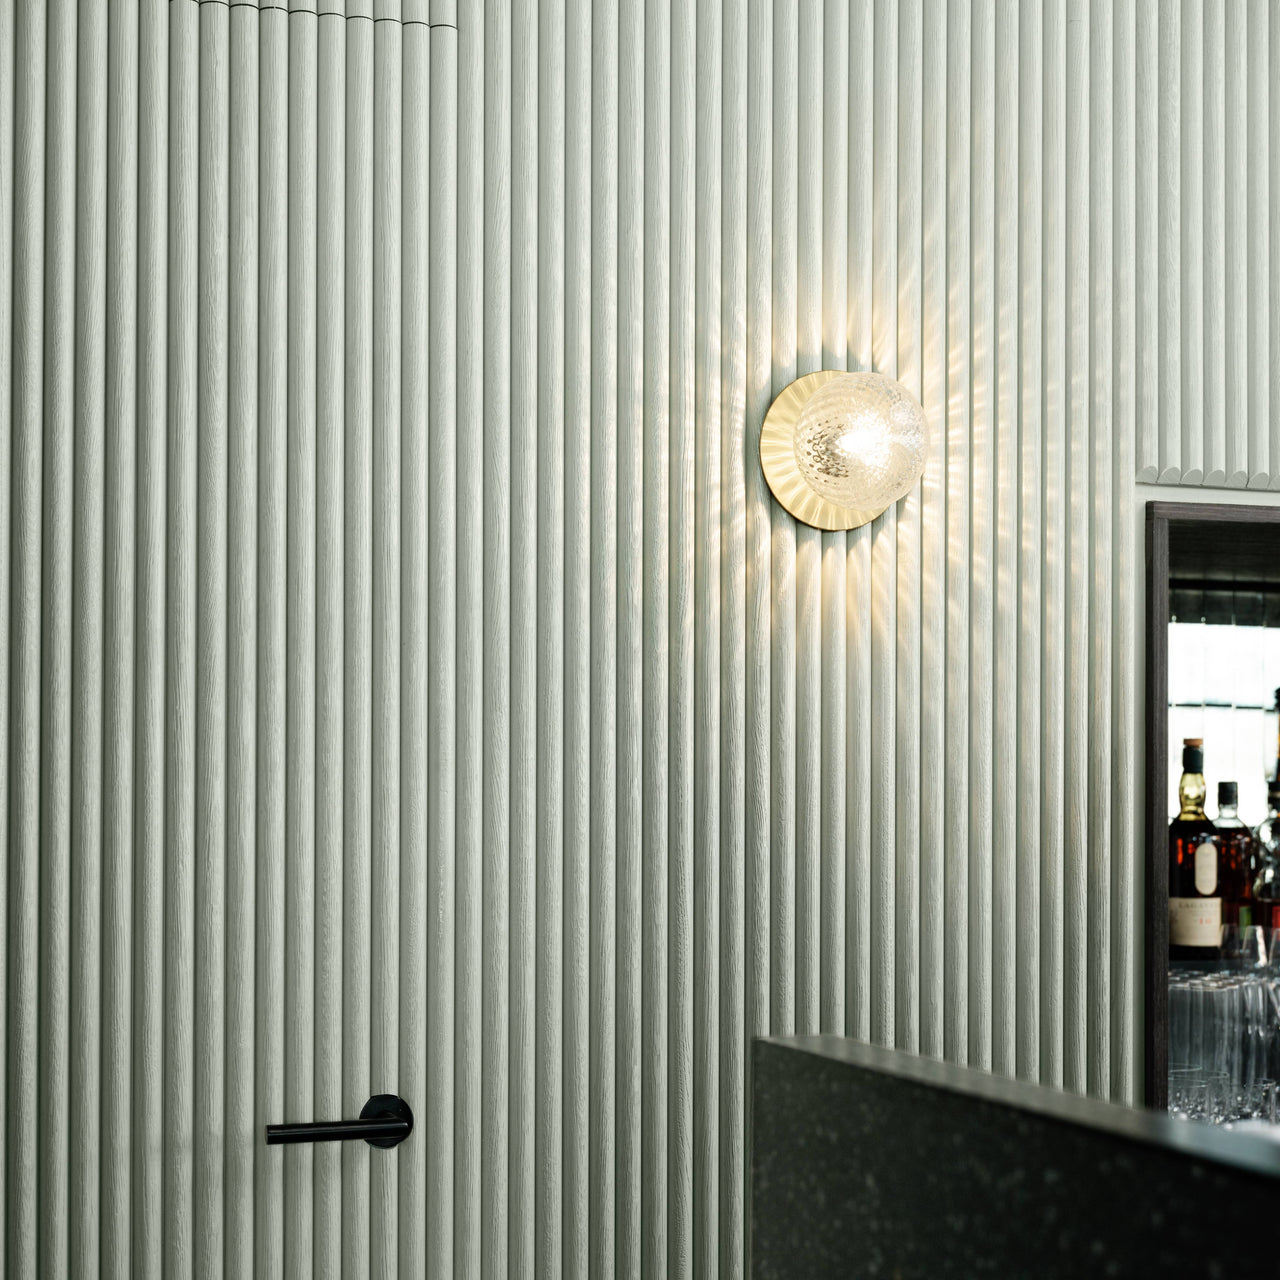 Liila 1 Wall/Ceiling Lamp